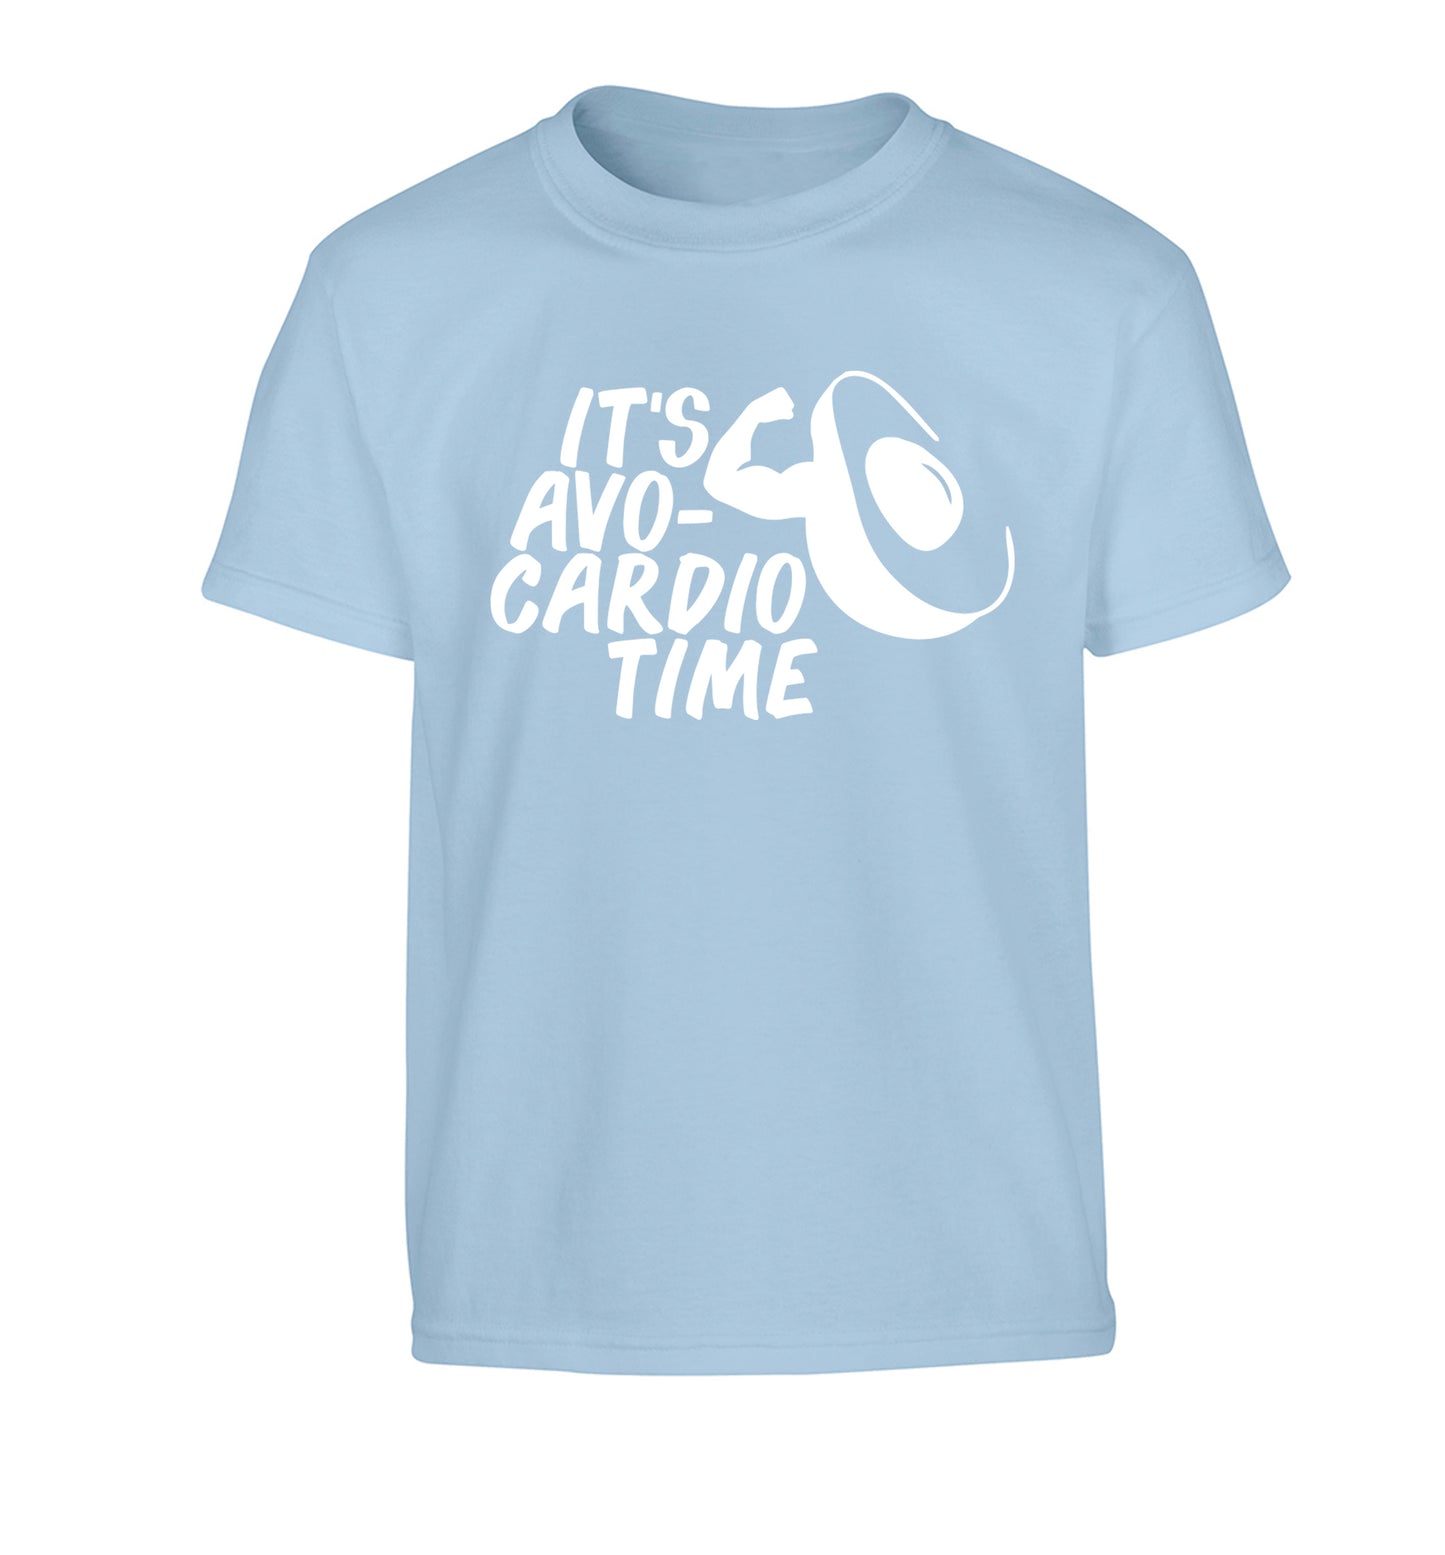 It's avo-cardio time Children's light blue Tshirt 12-14 Years